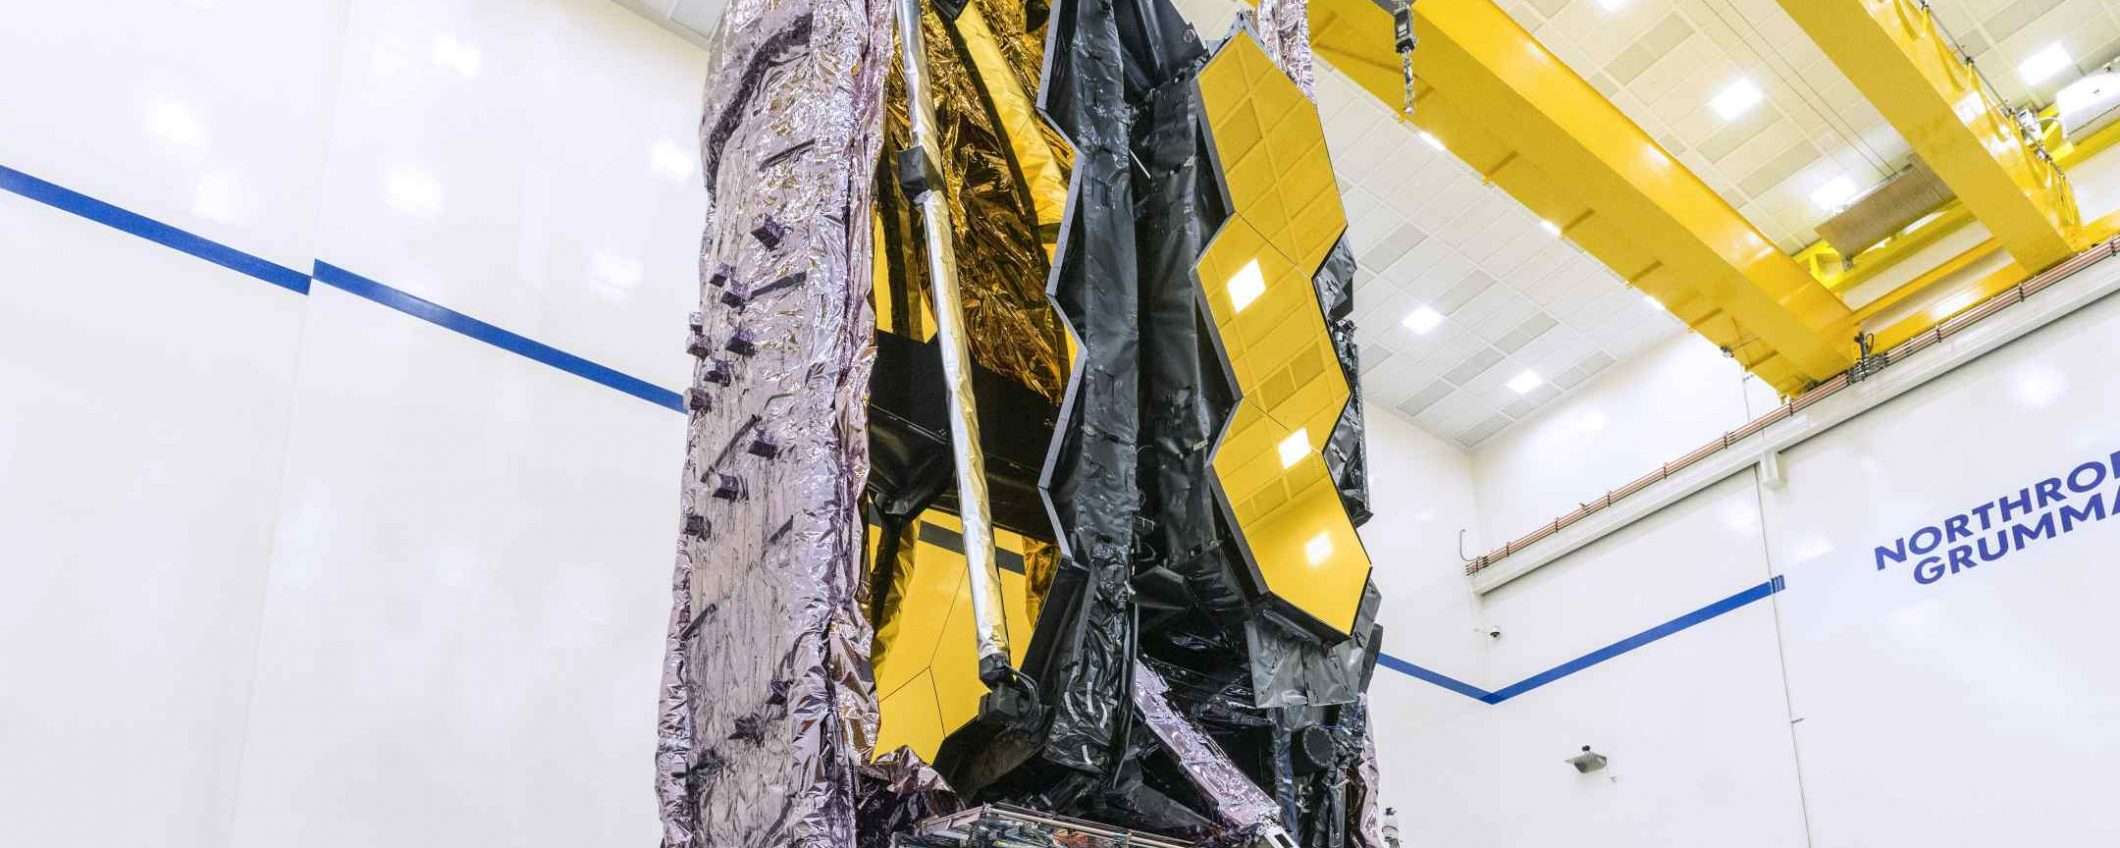 James Webb Space Telescope: lancio posticipato (update)